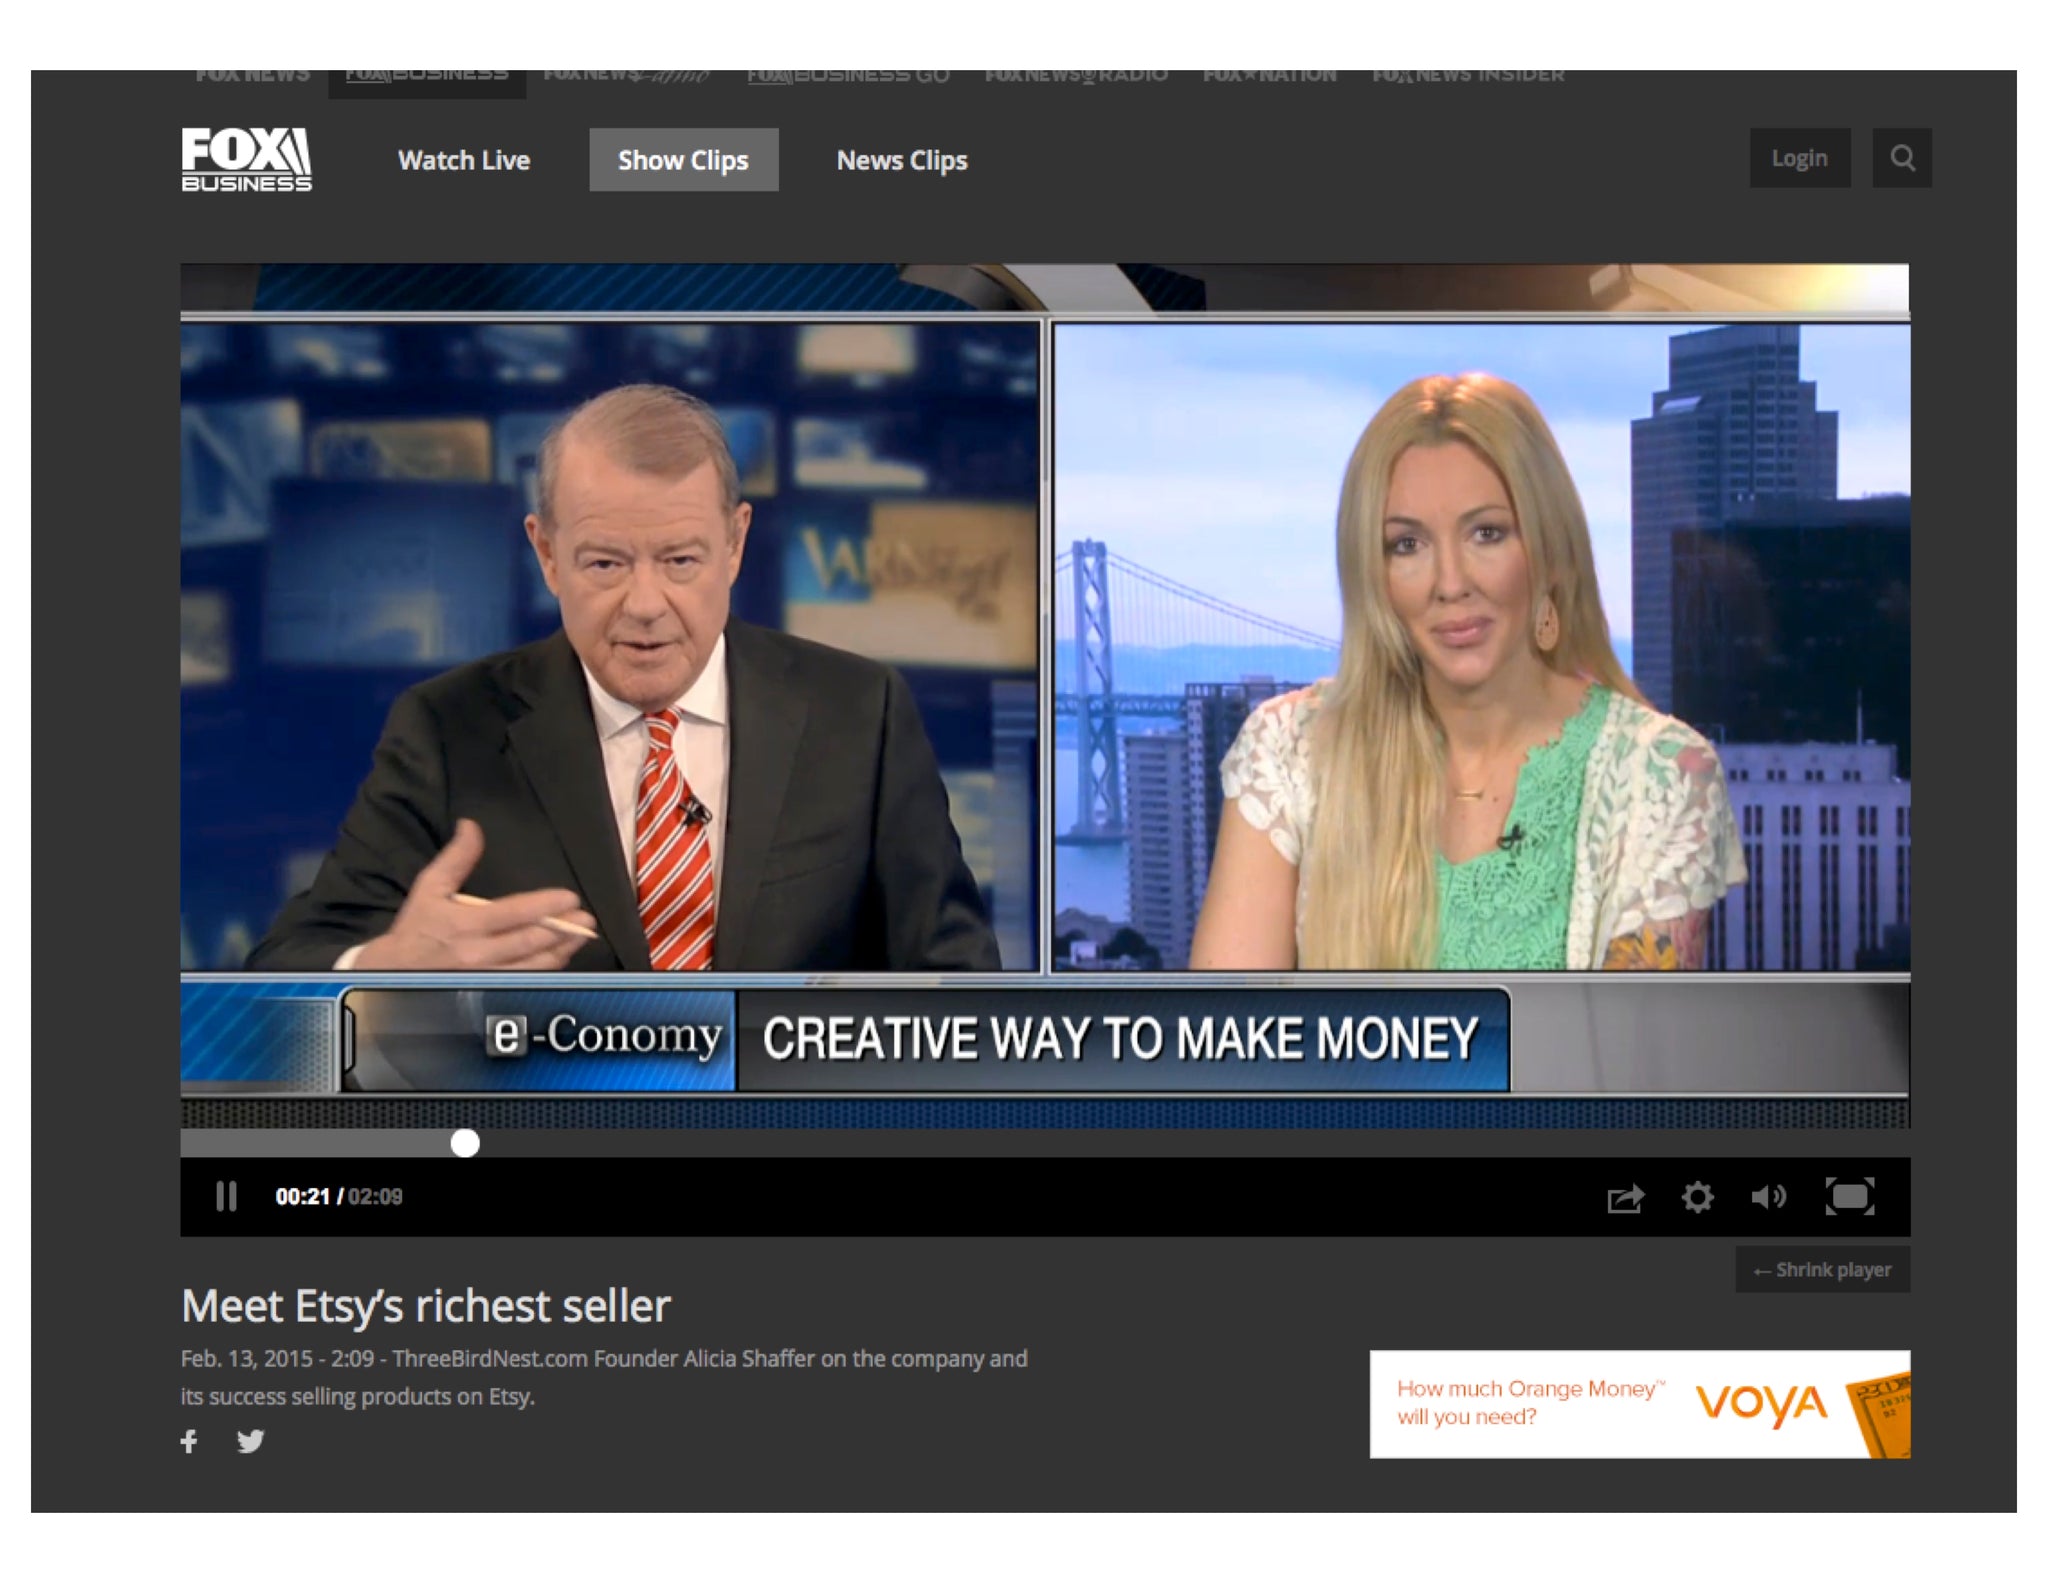 ETSY's Richest Seller Alicia Shaffer Talks Creative Ways to Make Money on FOX NEWS